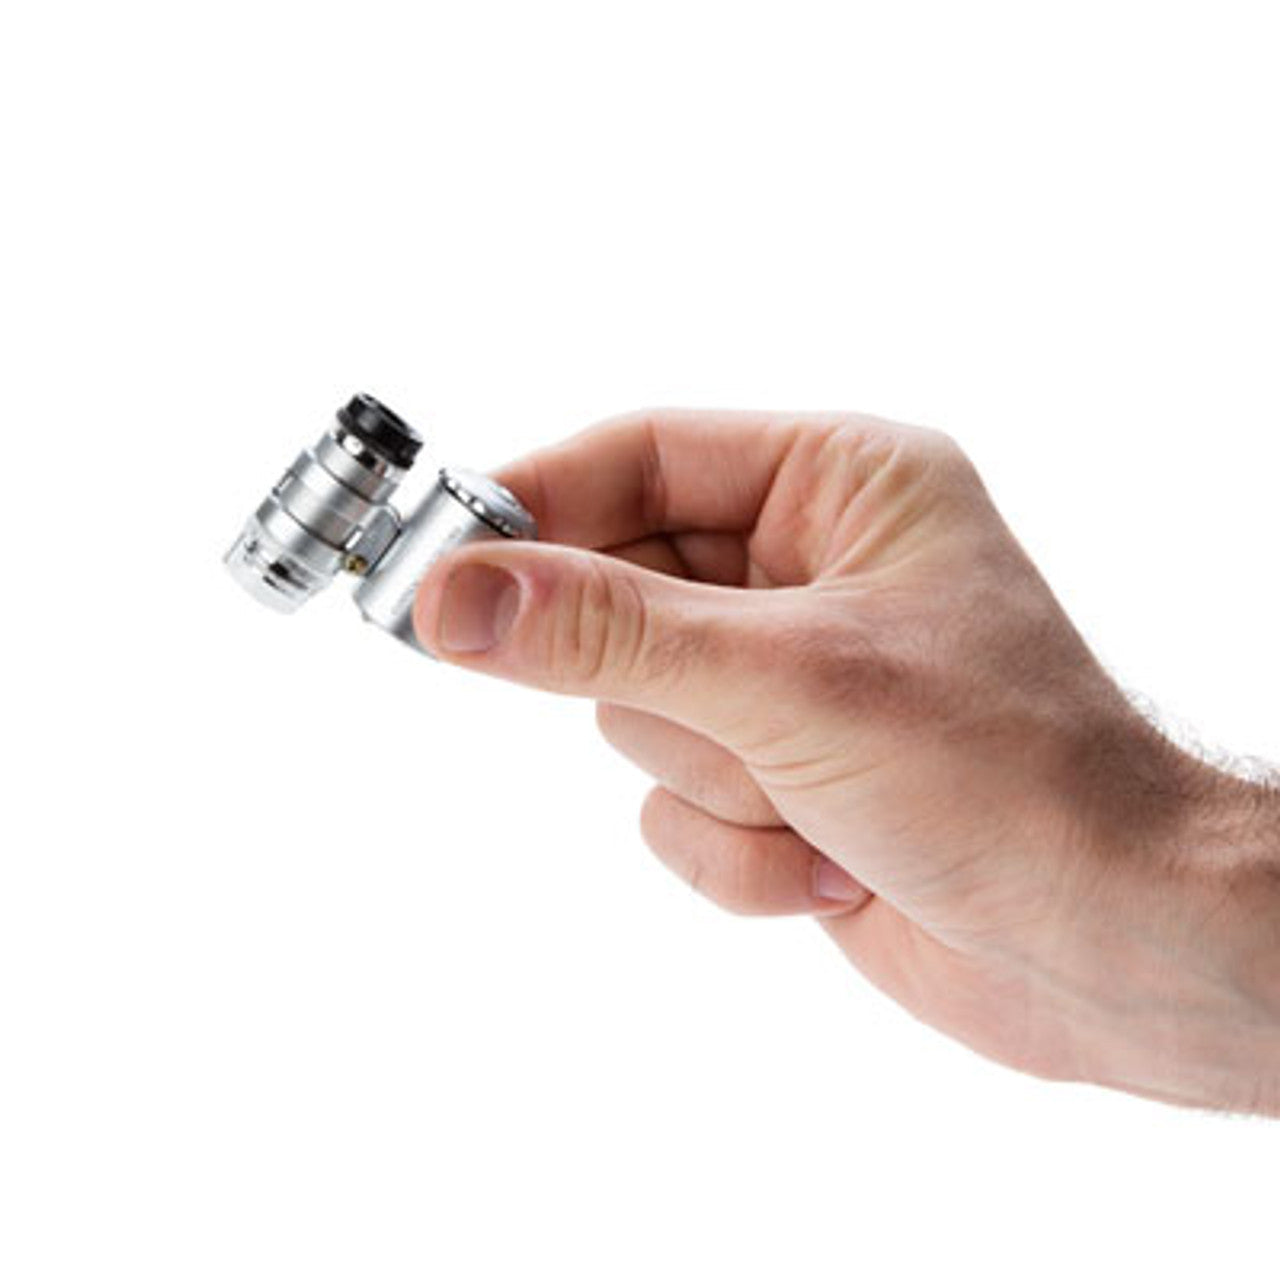 Microscopio: tamaño de bolsillo, iluminado, zoom de 45x y estuche de transporte